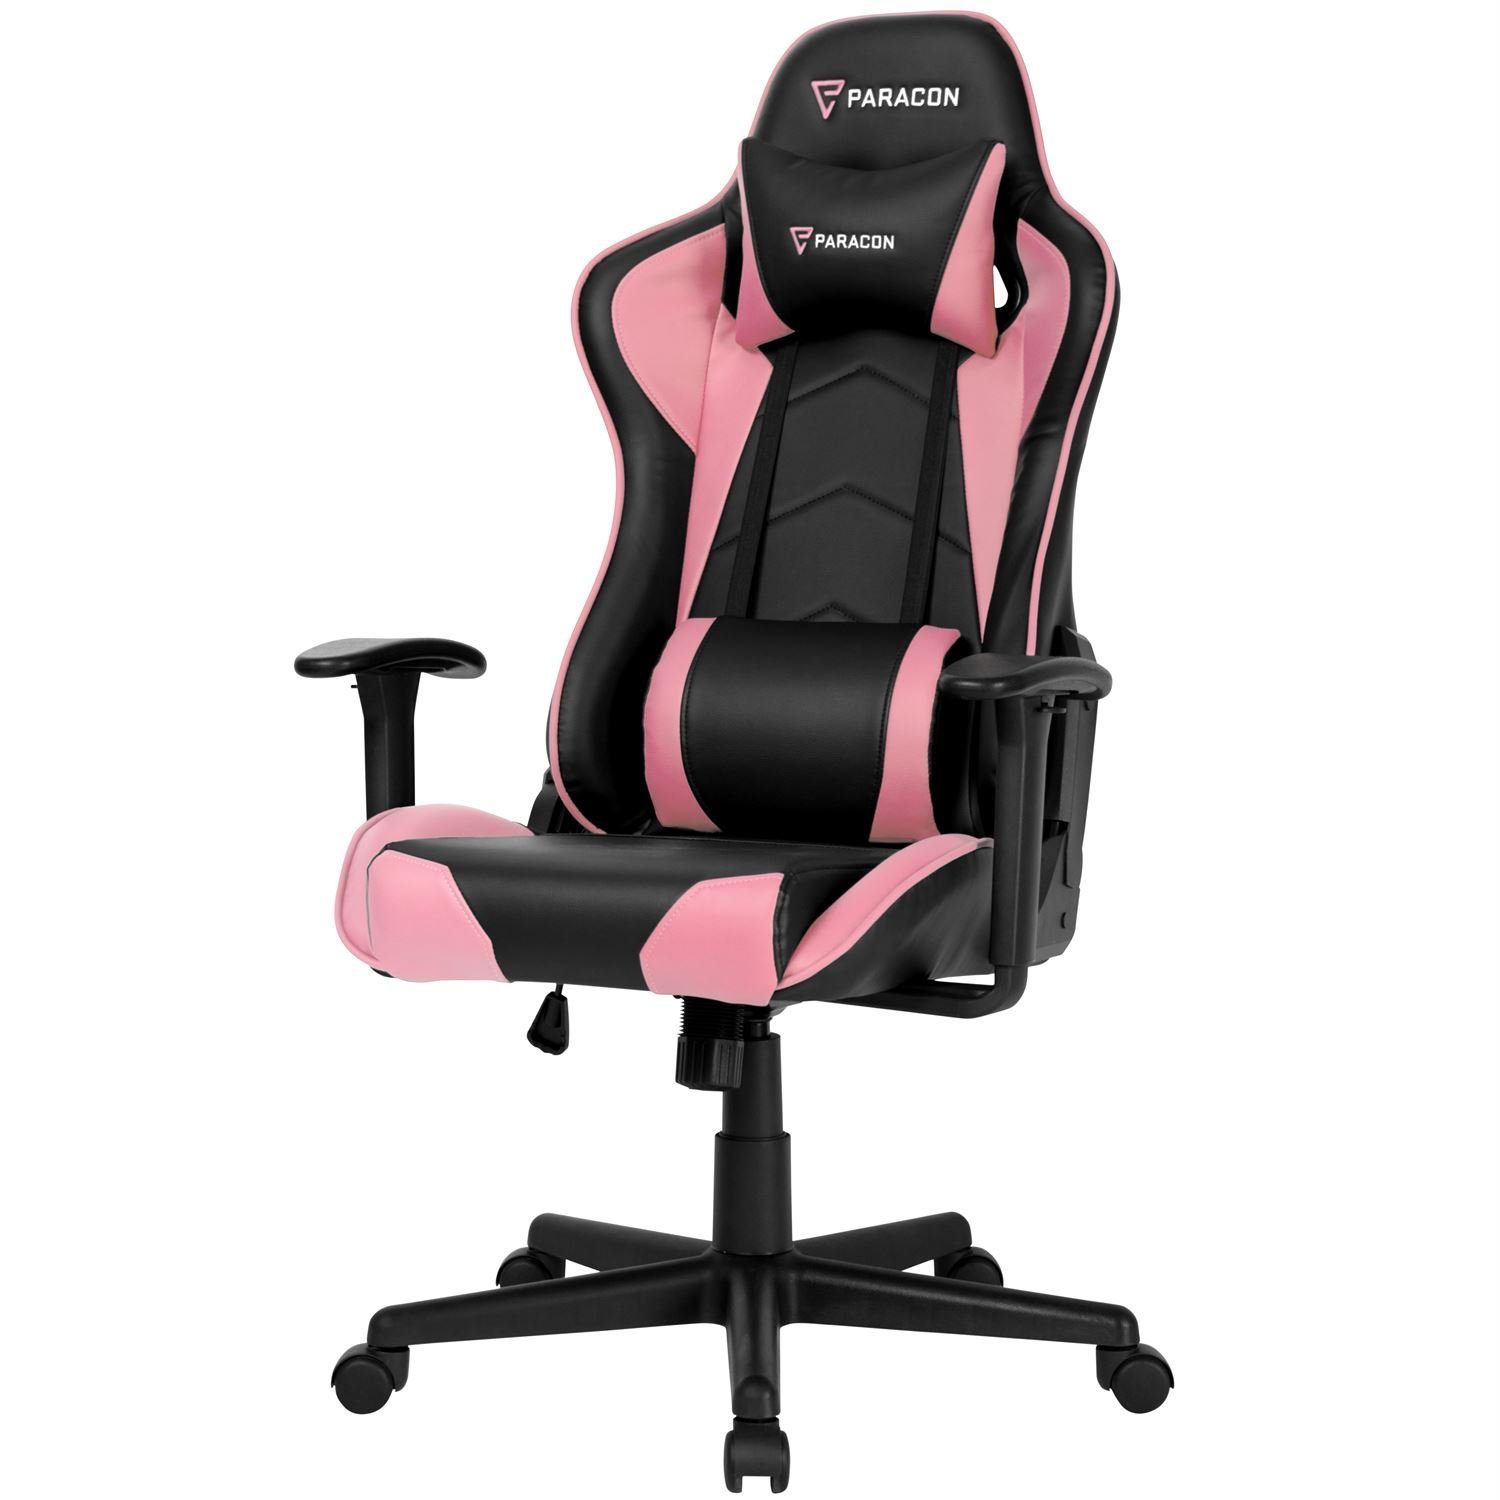 und Gamin Gaming-Stuhl inkl. Paracon Nackenkissen Brawler Pink Stuhl ebuy24